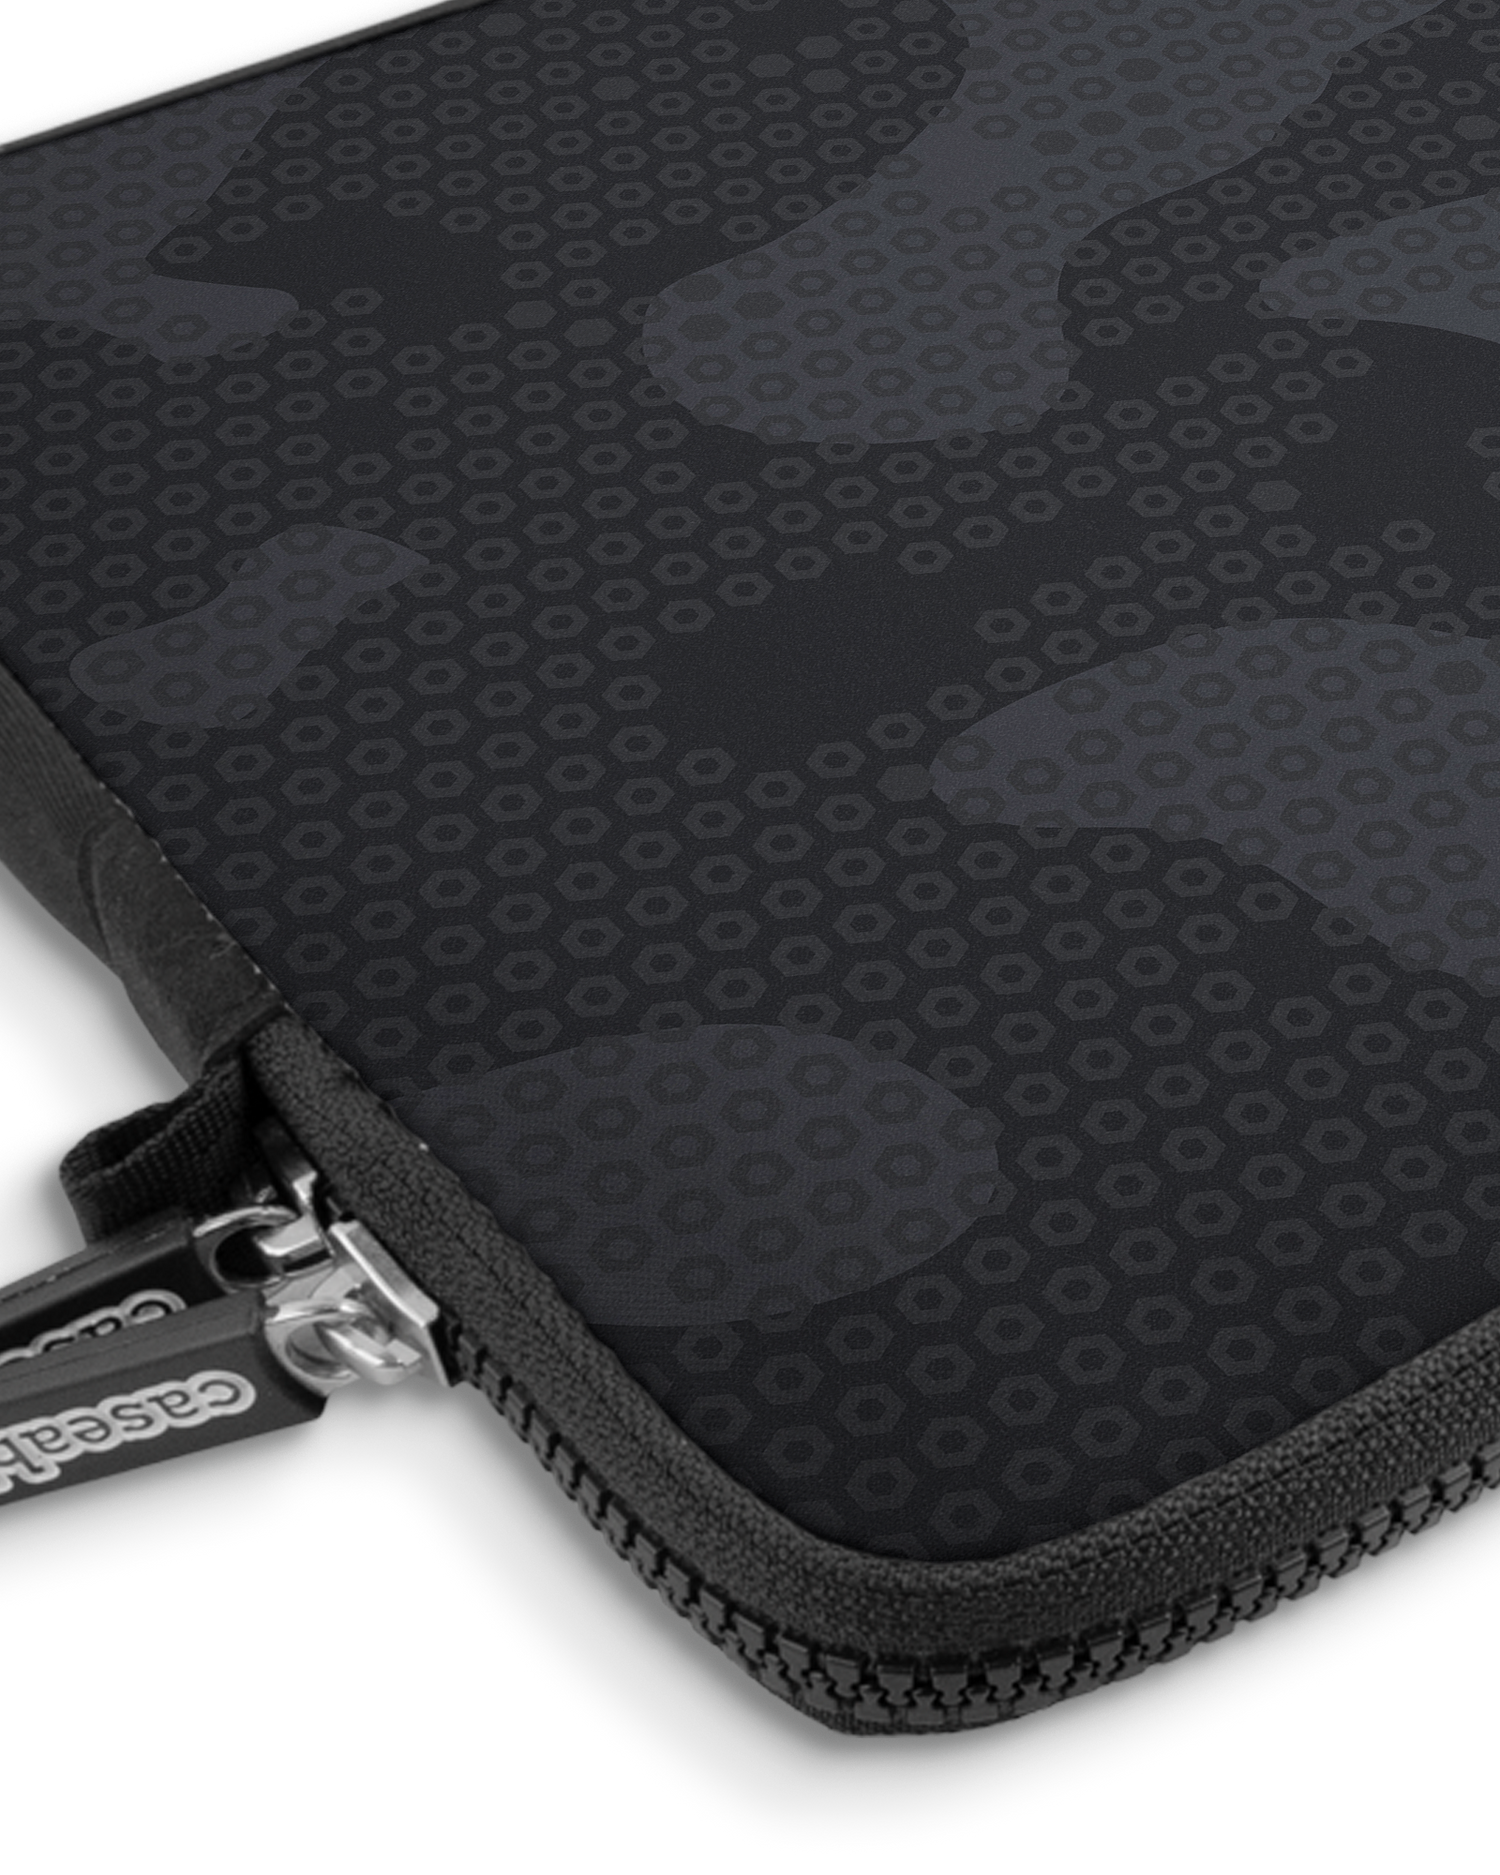 Spec Ops Dark Premium Laptop Bag 13 inch with device inside